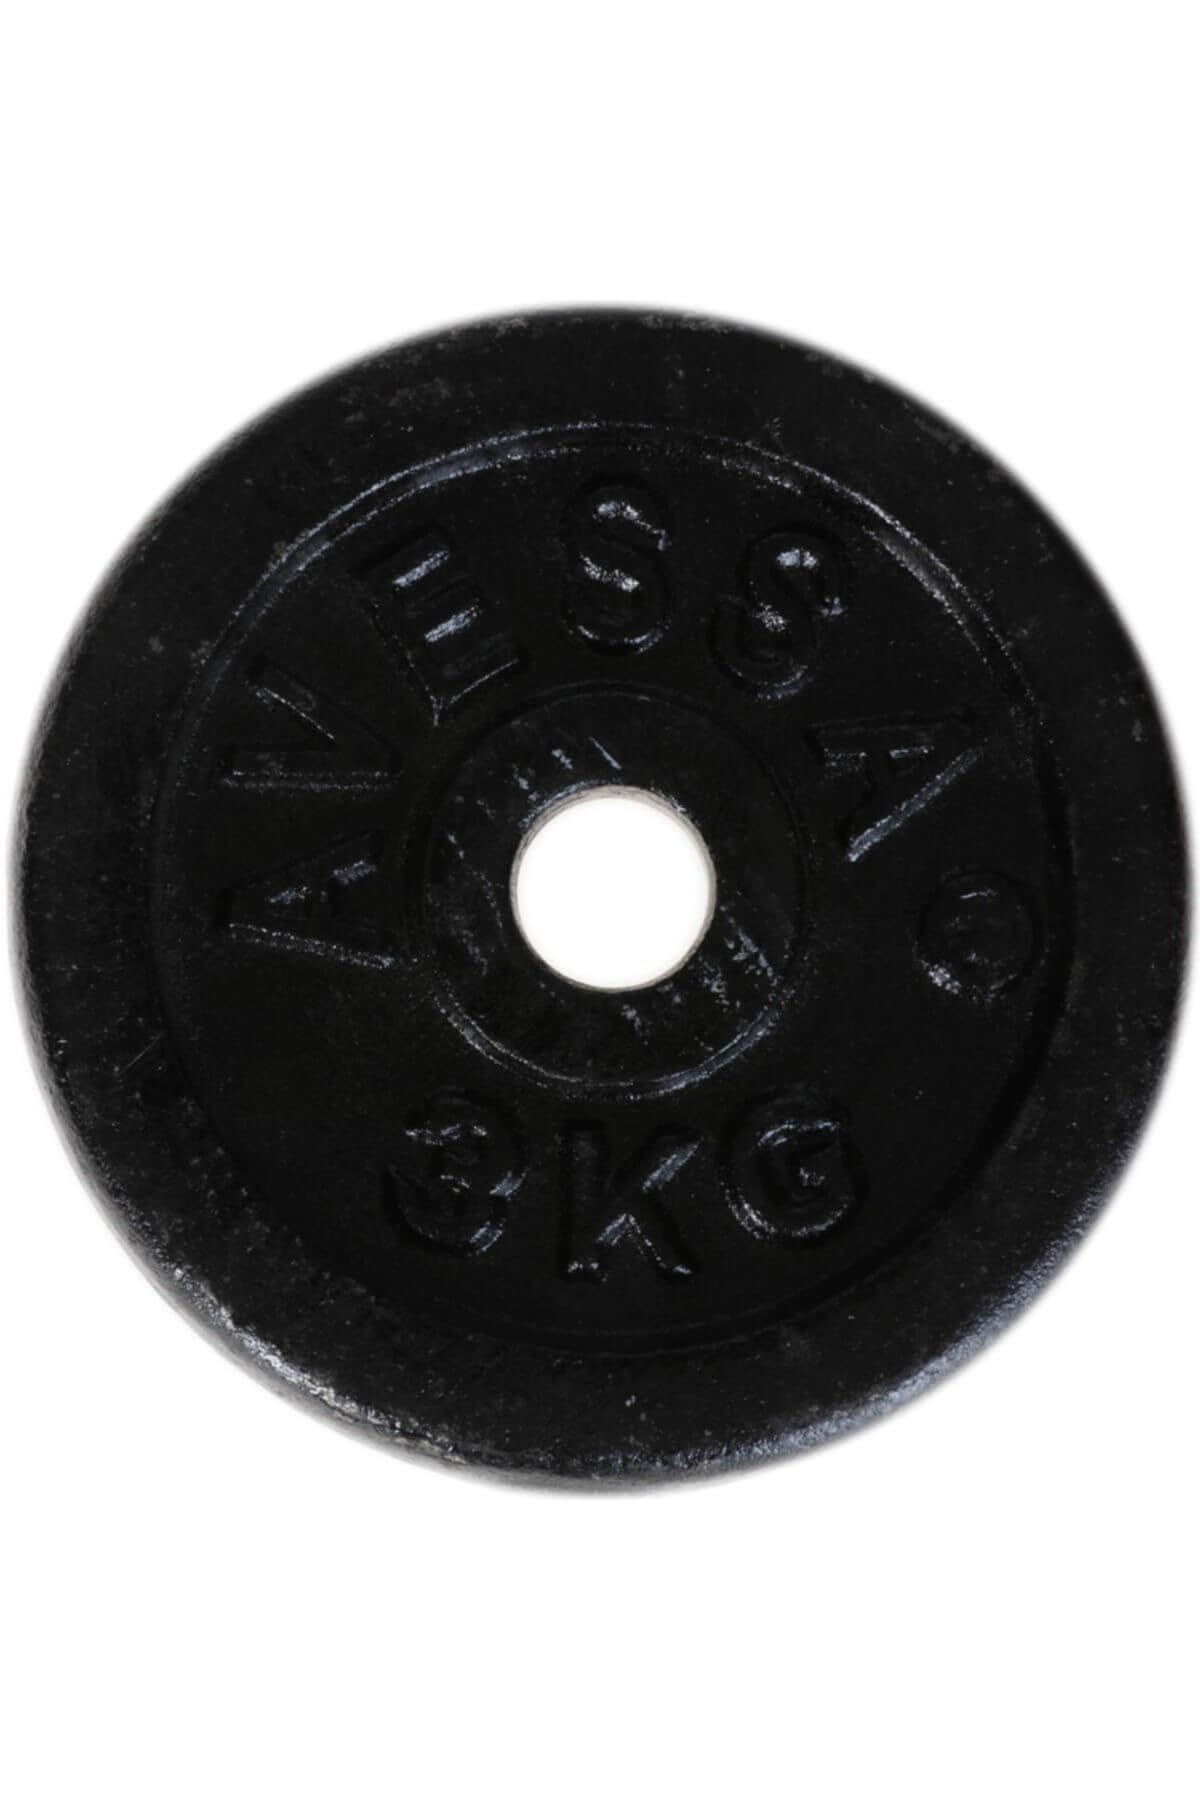 Avessa Döküm Ağırlık Siyah Plaka 3 kg 2016090206